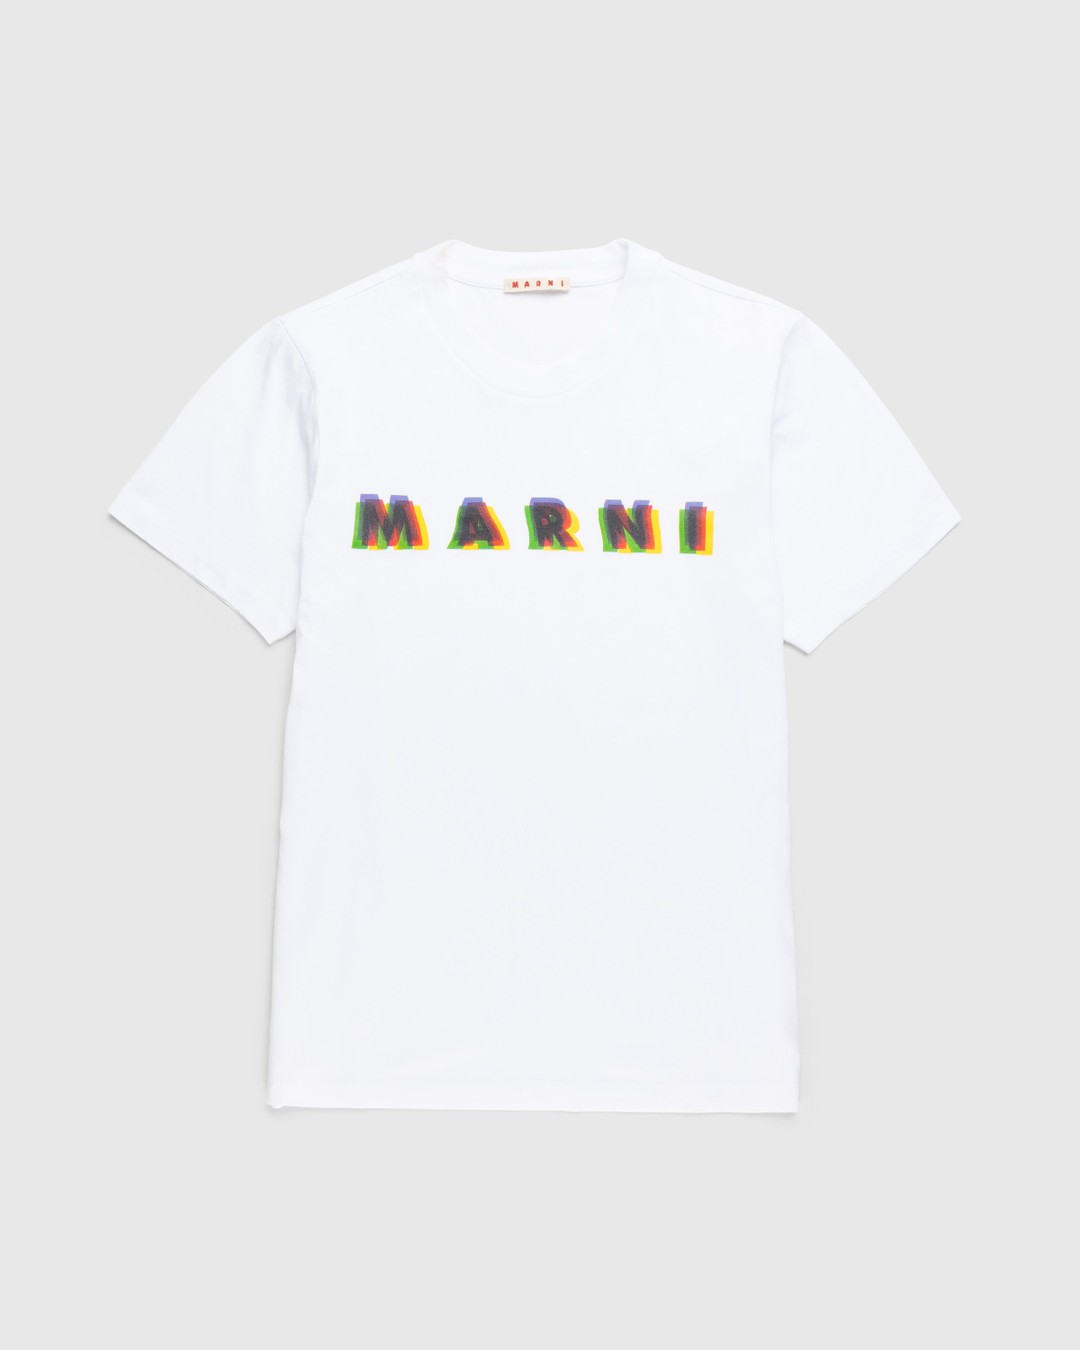 Marni – Logo Print T-Shirt Lily White | Highsnobiety Shop